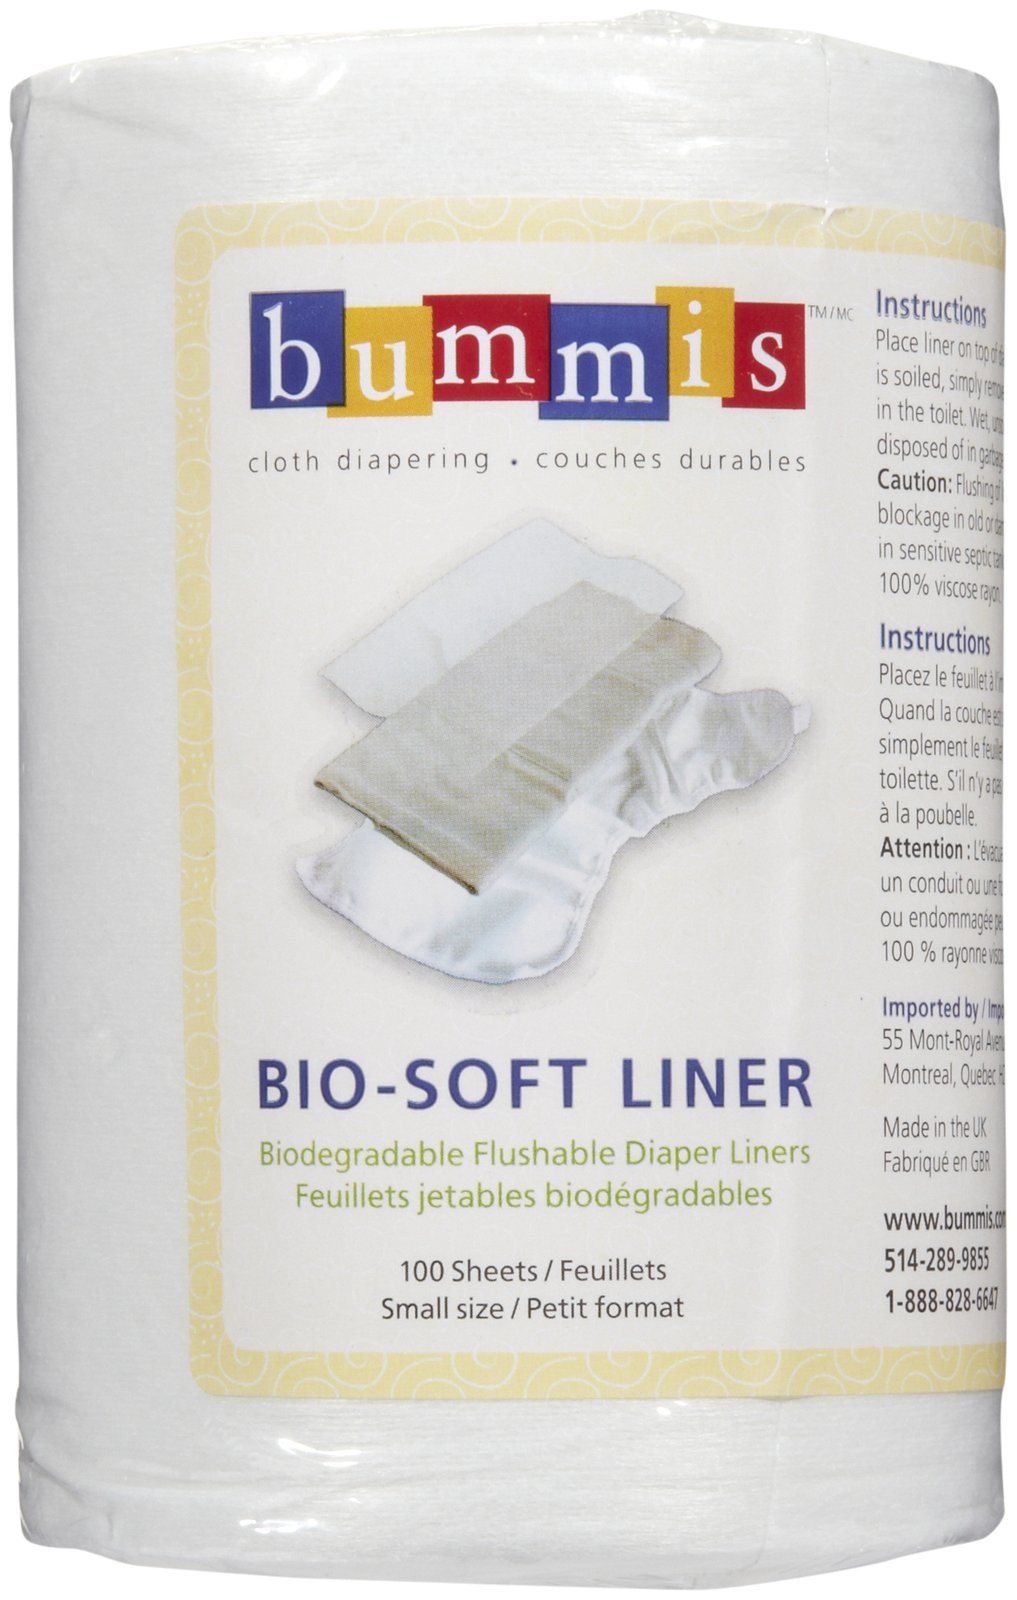 biodegradable cloth diaper liners